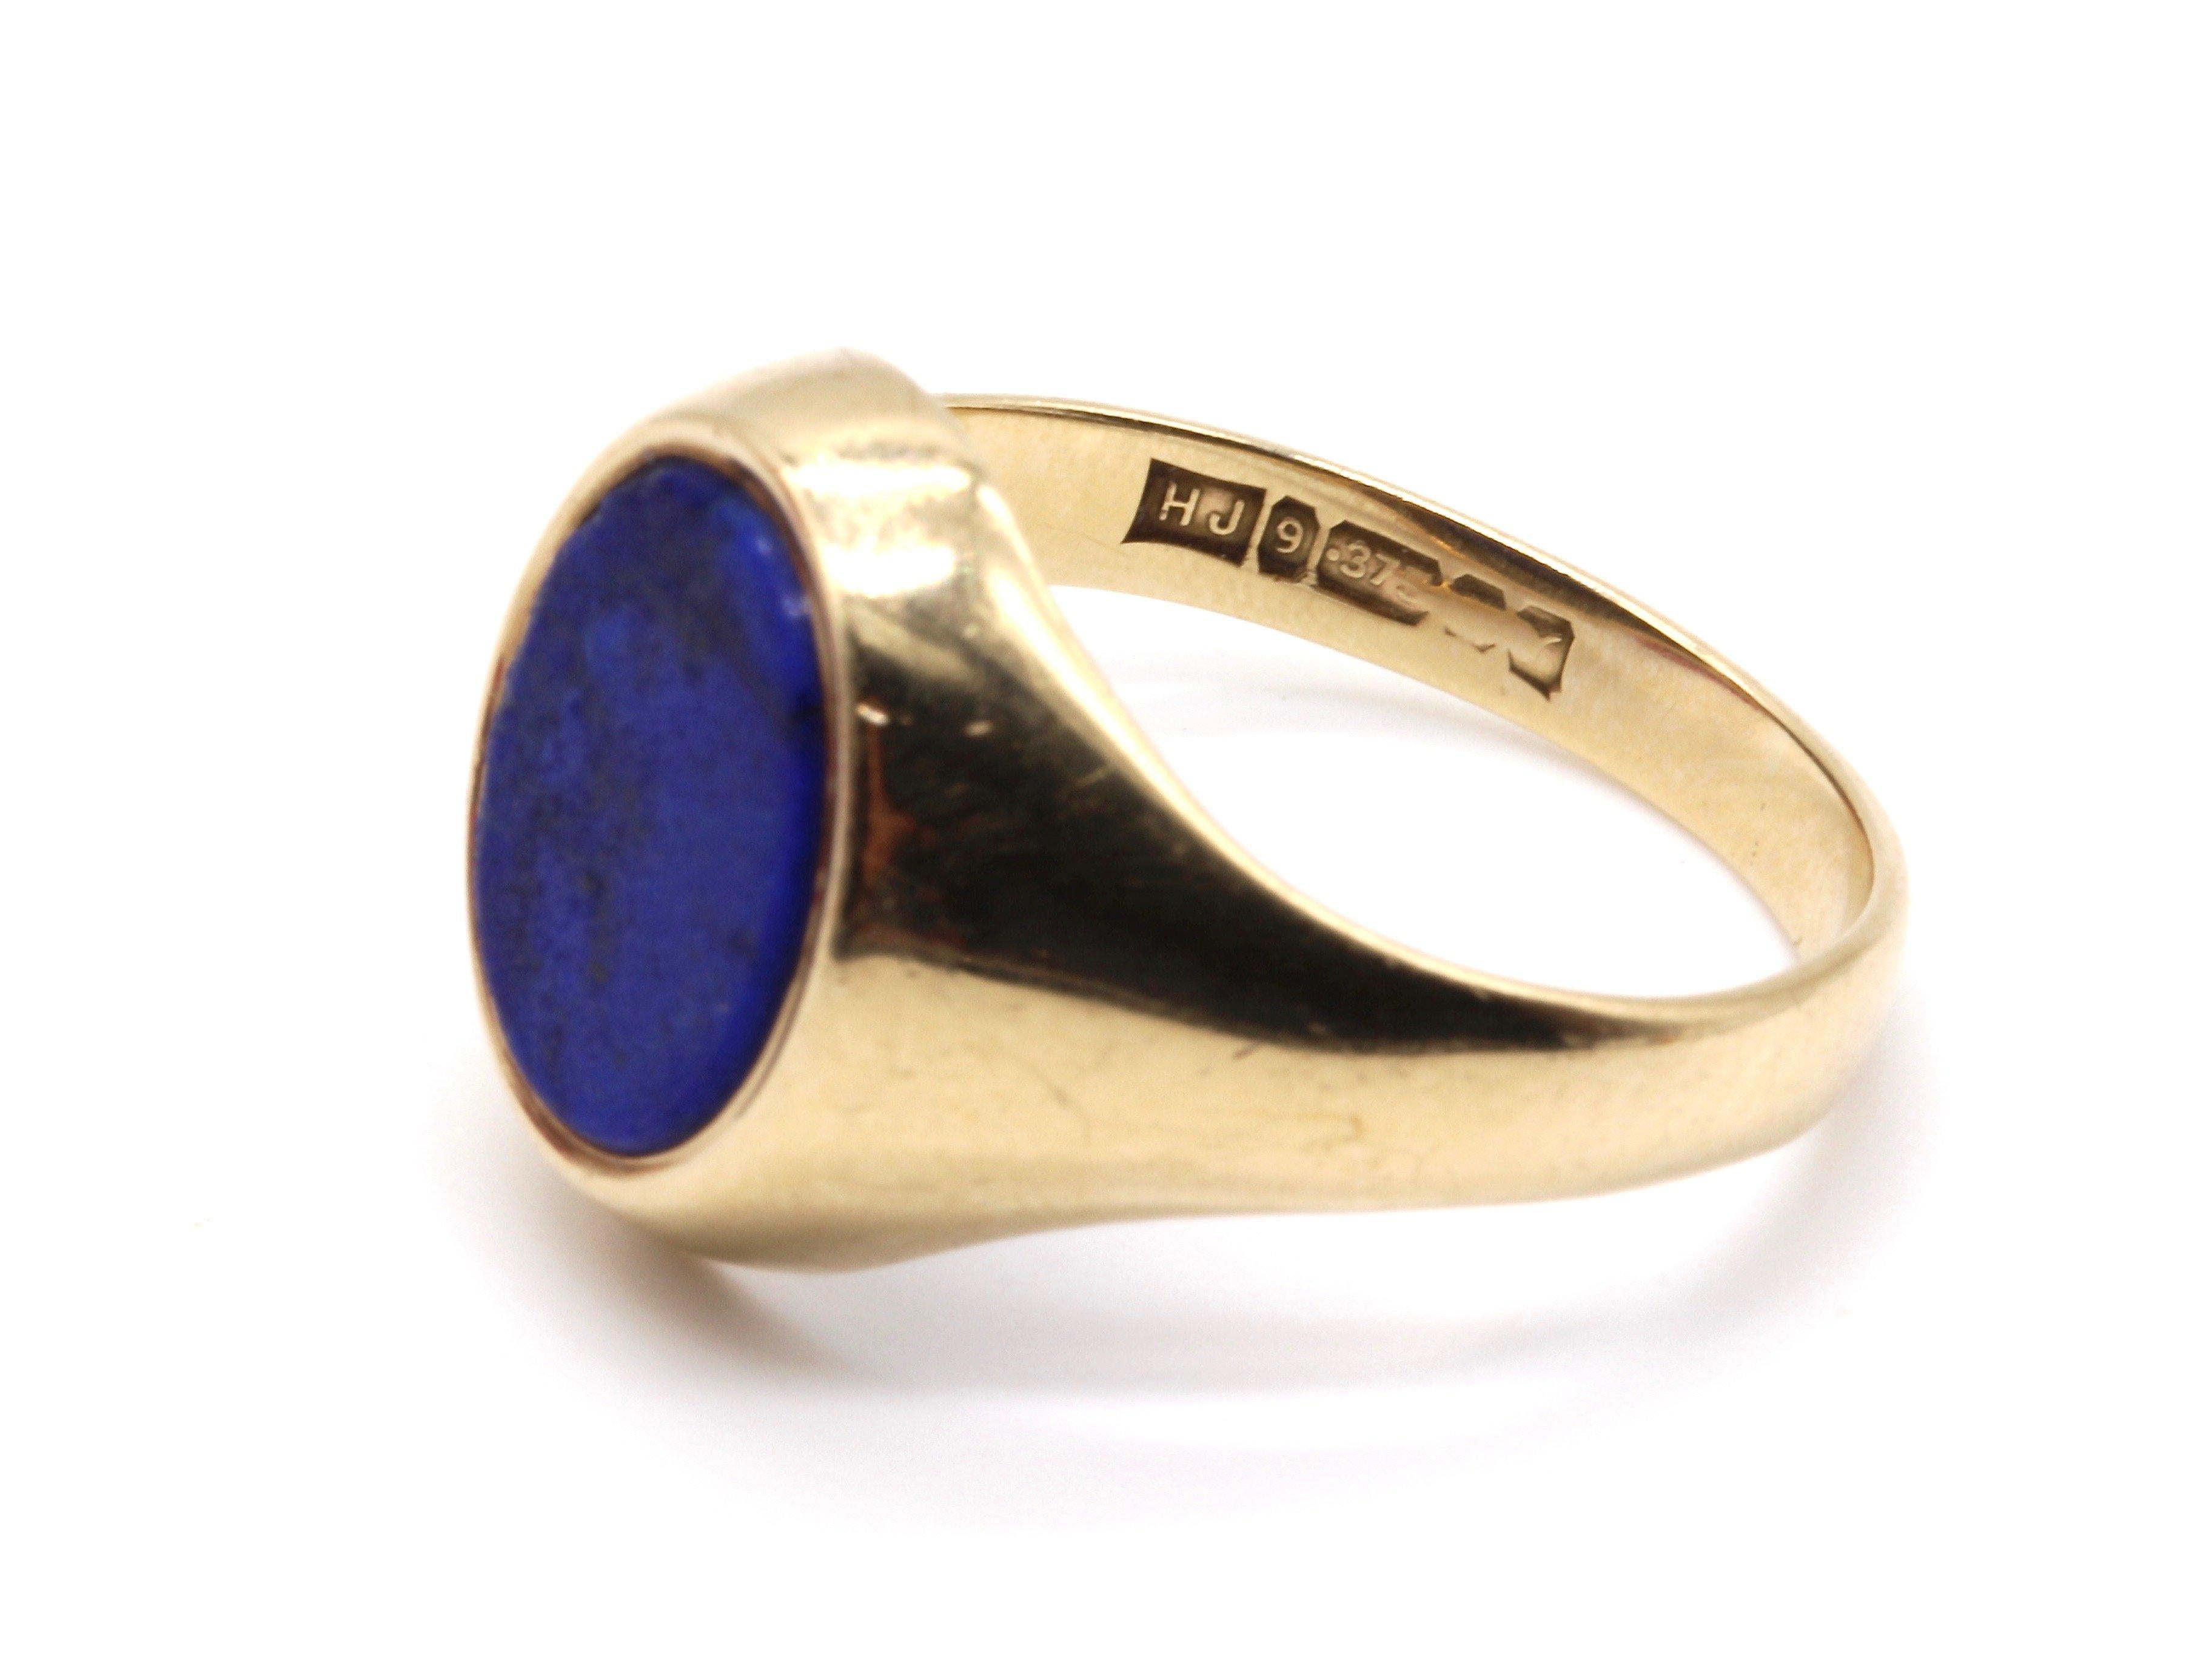 A fine 9 Kt gold and lapis lazuli oval faced Gentleman's signet ring.
Size UK   U
        USA 10.25    

Weight 5.1gm. Diameter of face 14mm.
Hallmarked maker HJ